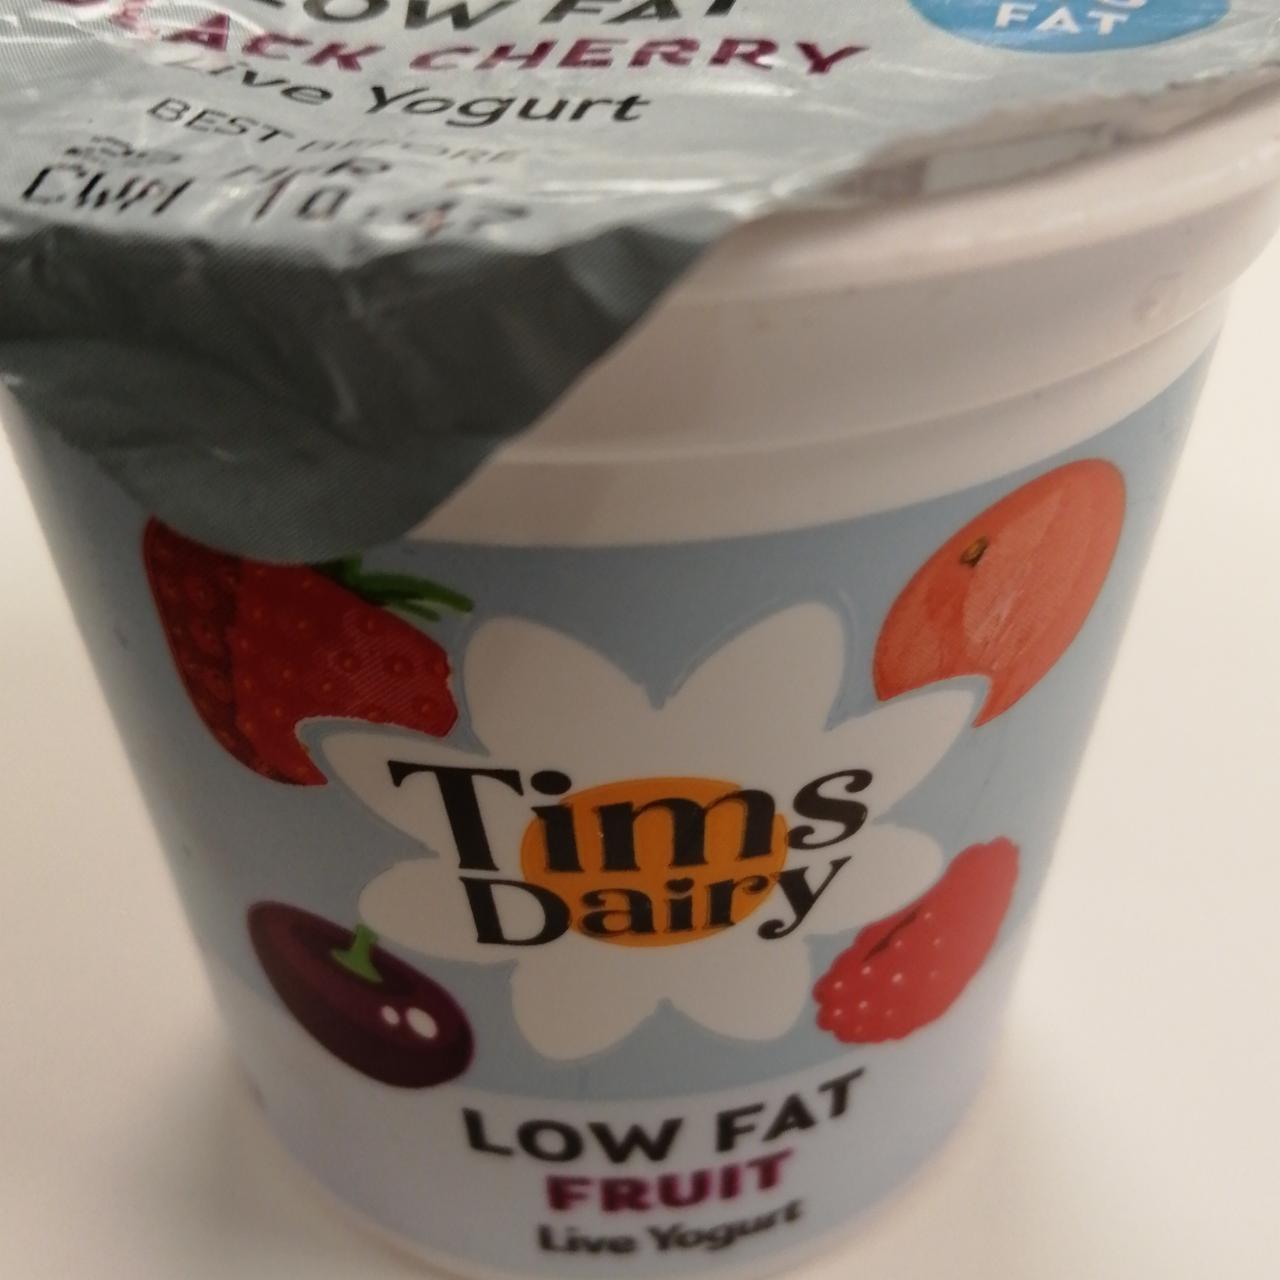 Fotografie - Low Fat Fruit Live Yogurt Black Cherry Tims Dairy